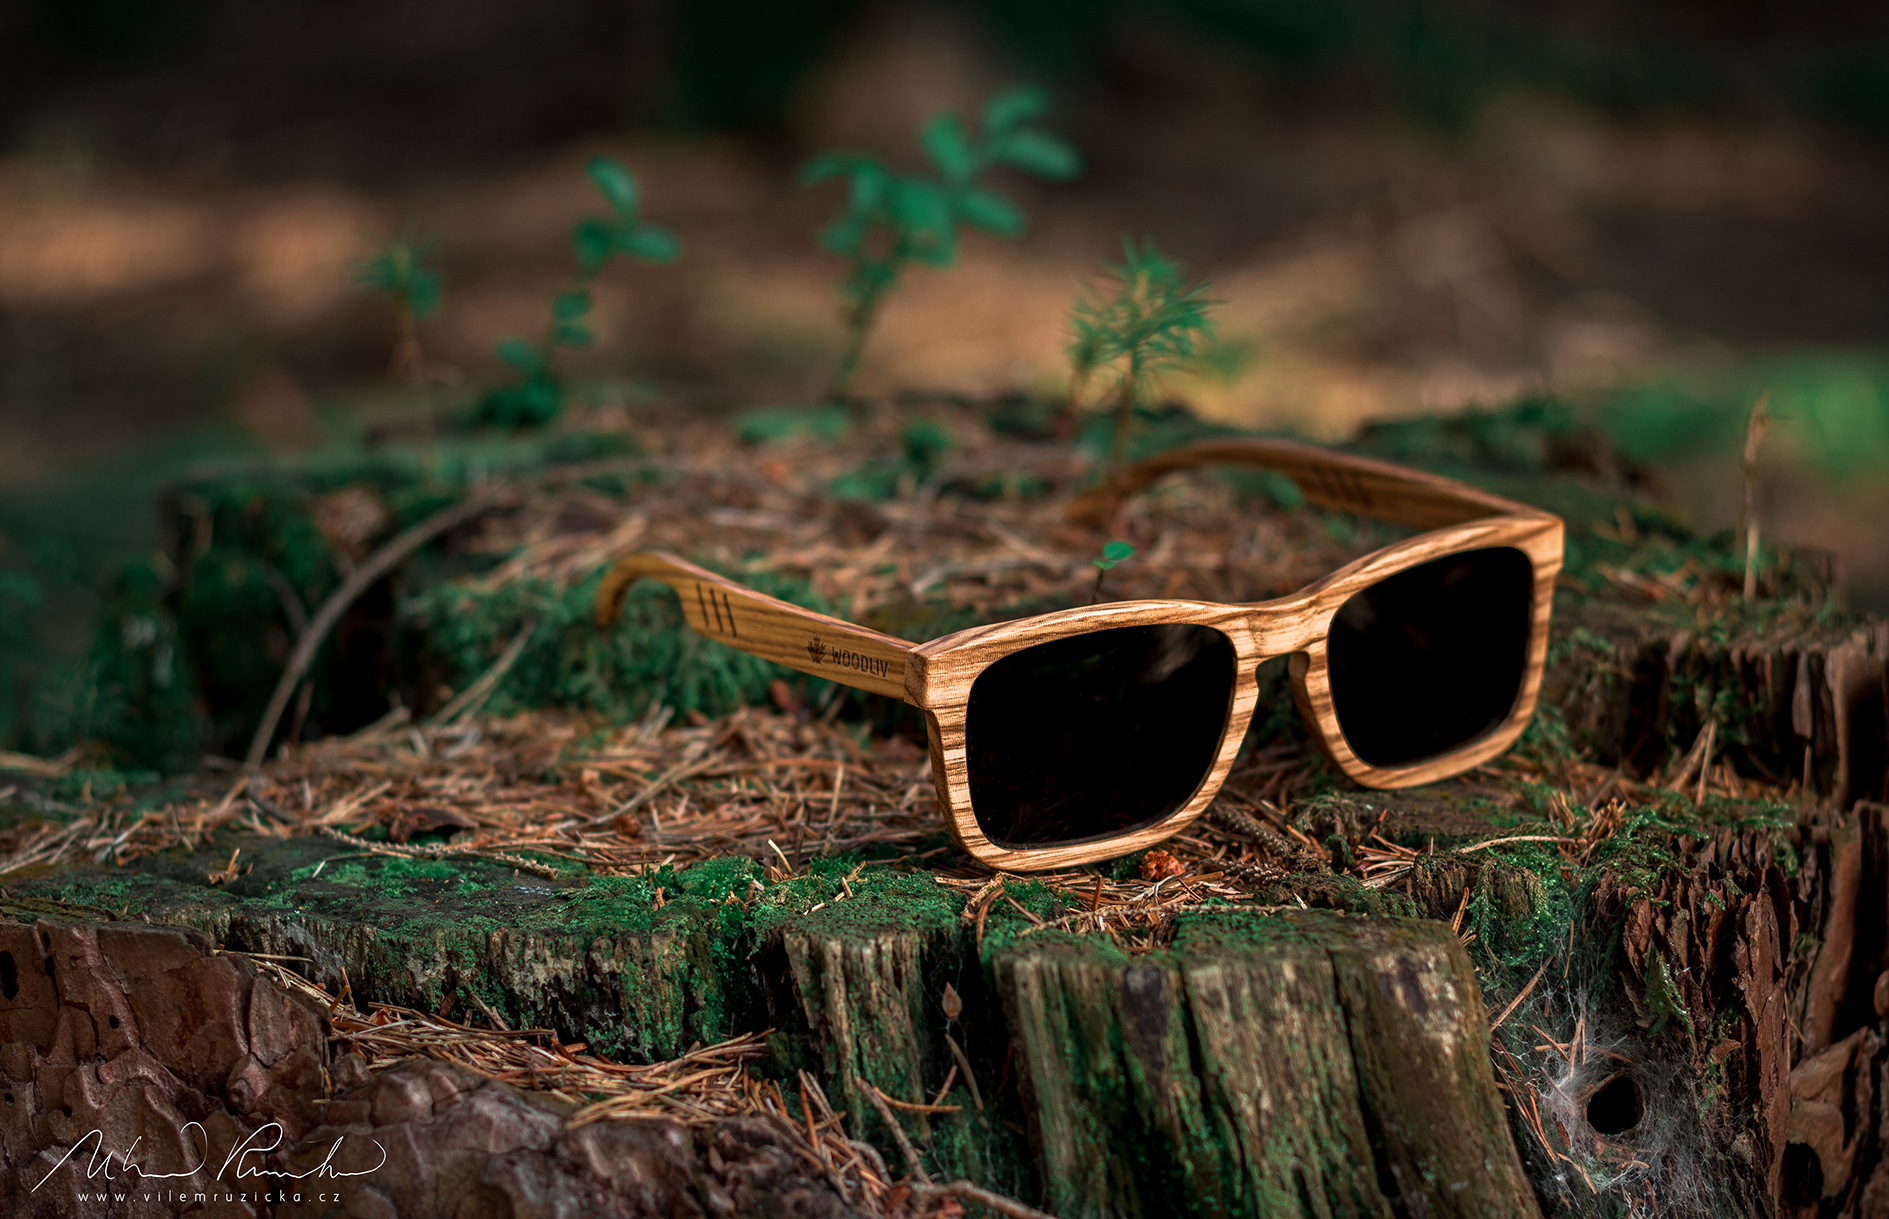 WOODLIV Sunglasses Product Photo